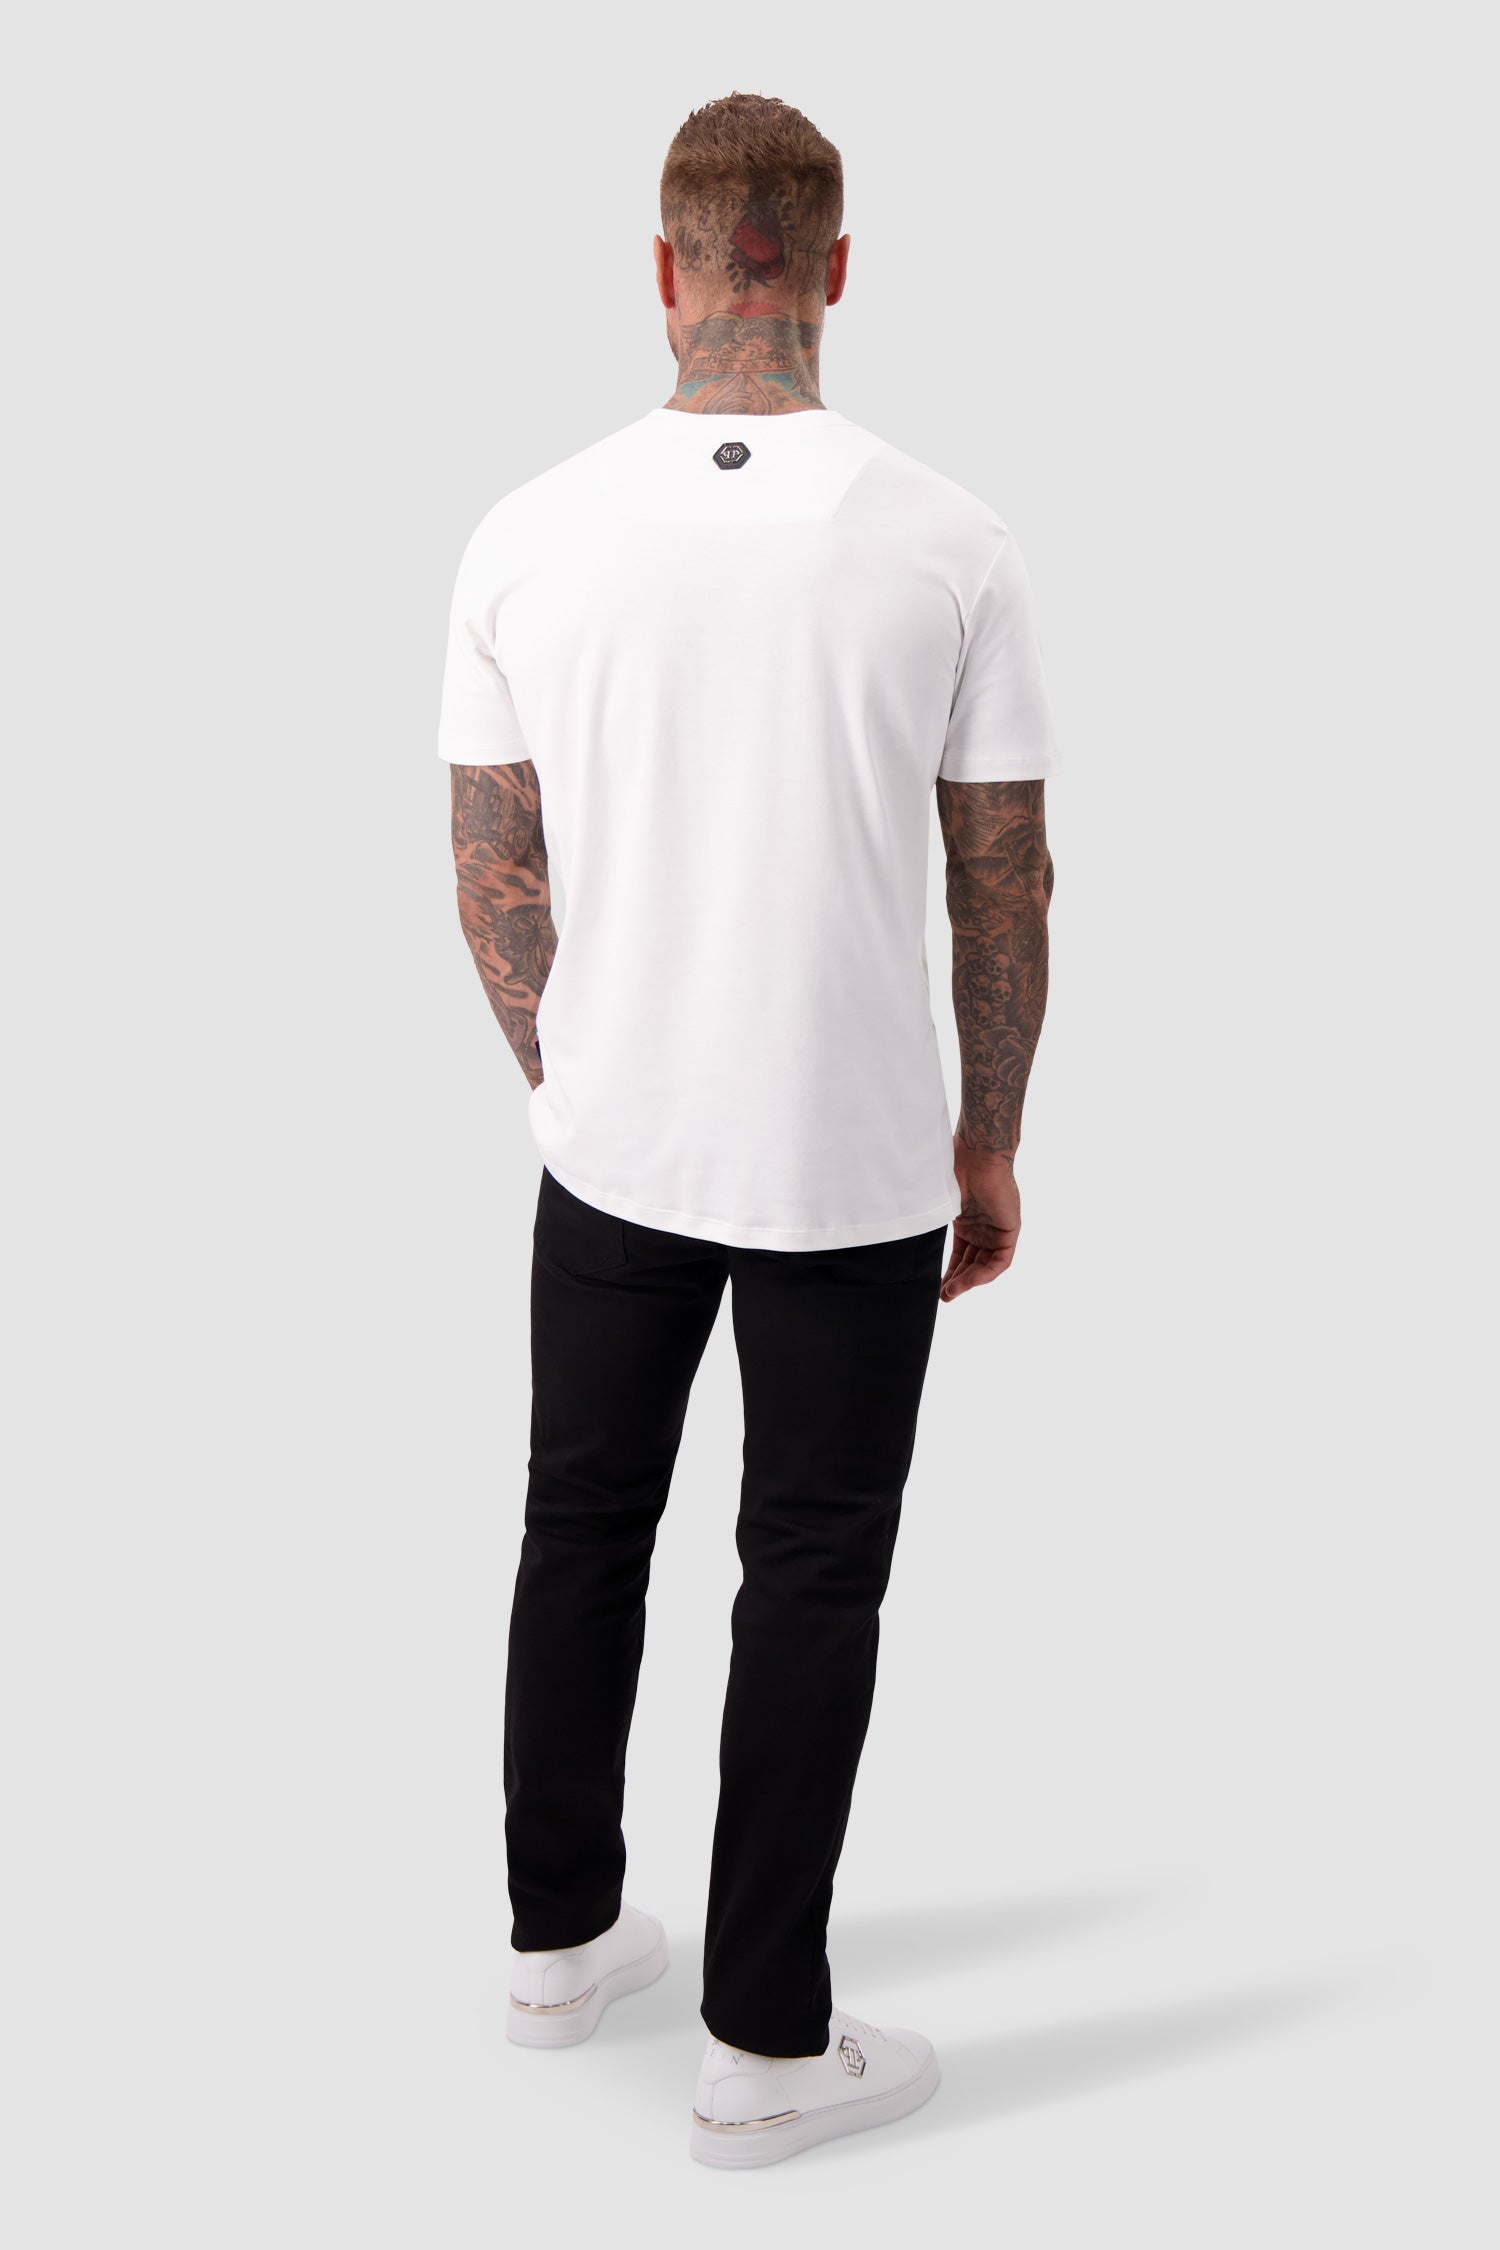 Philipp Plein White Round Neck SS T-Shirt